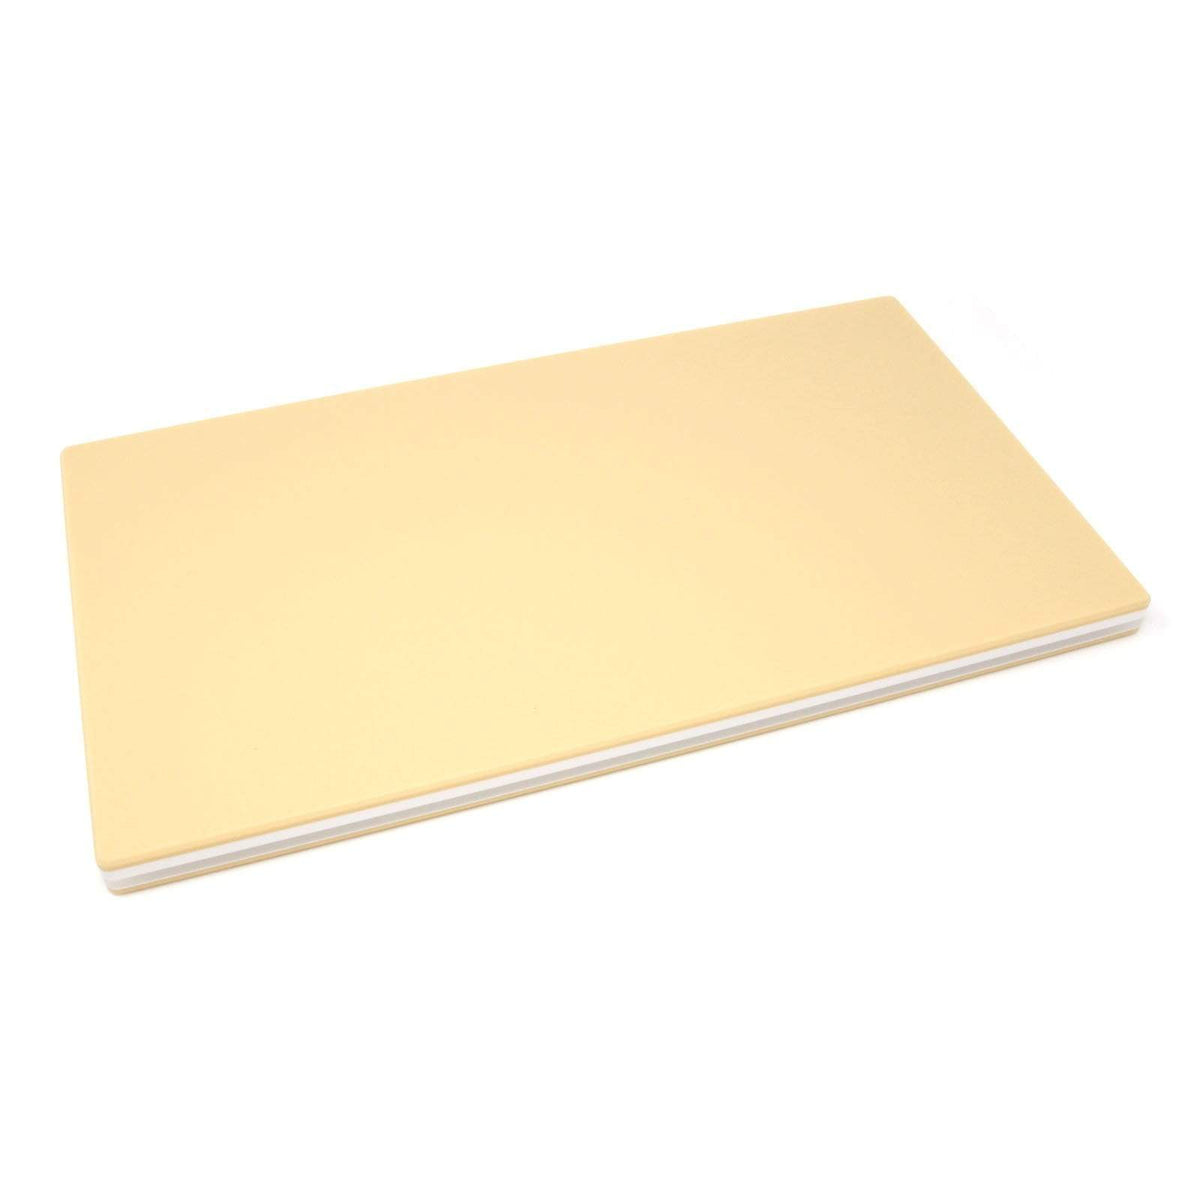 Hasegawa Wood Core Soft Rubber Cutting Board Cutting Boards